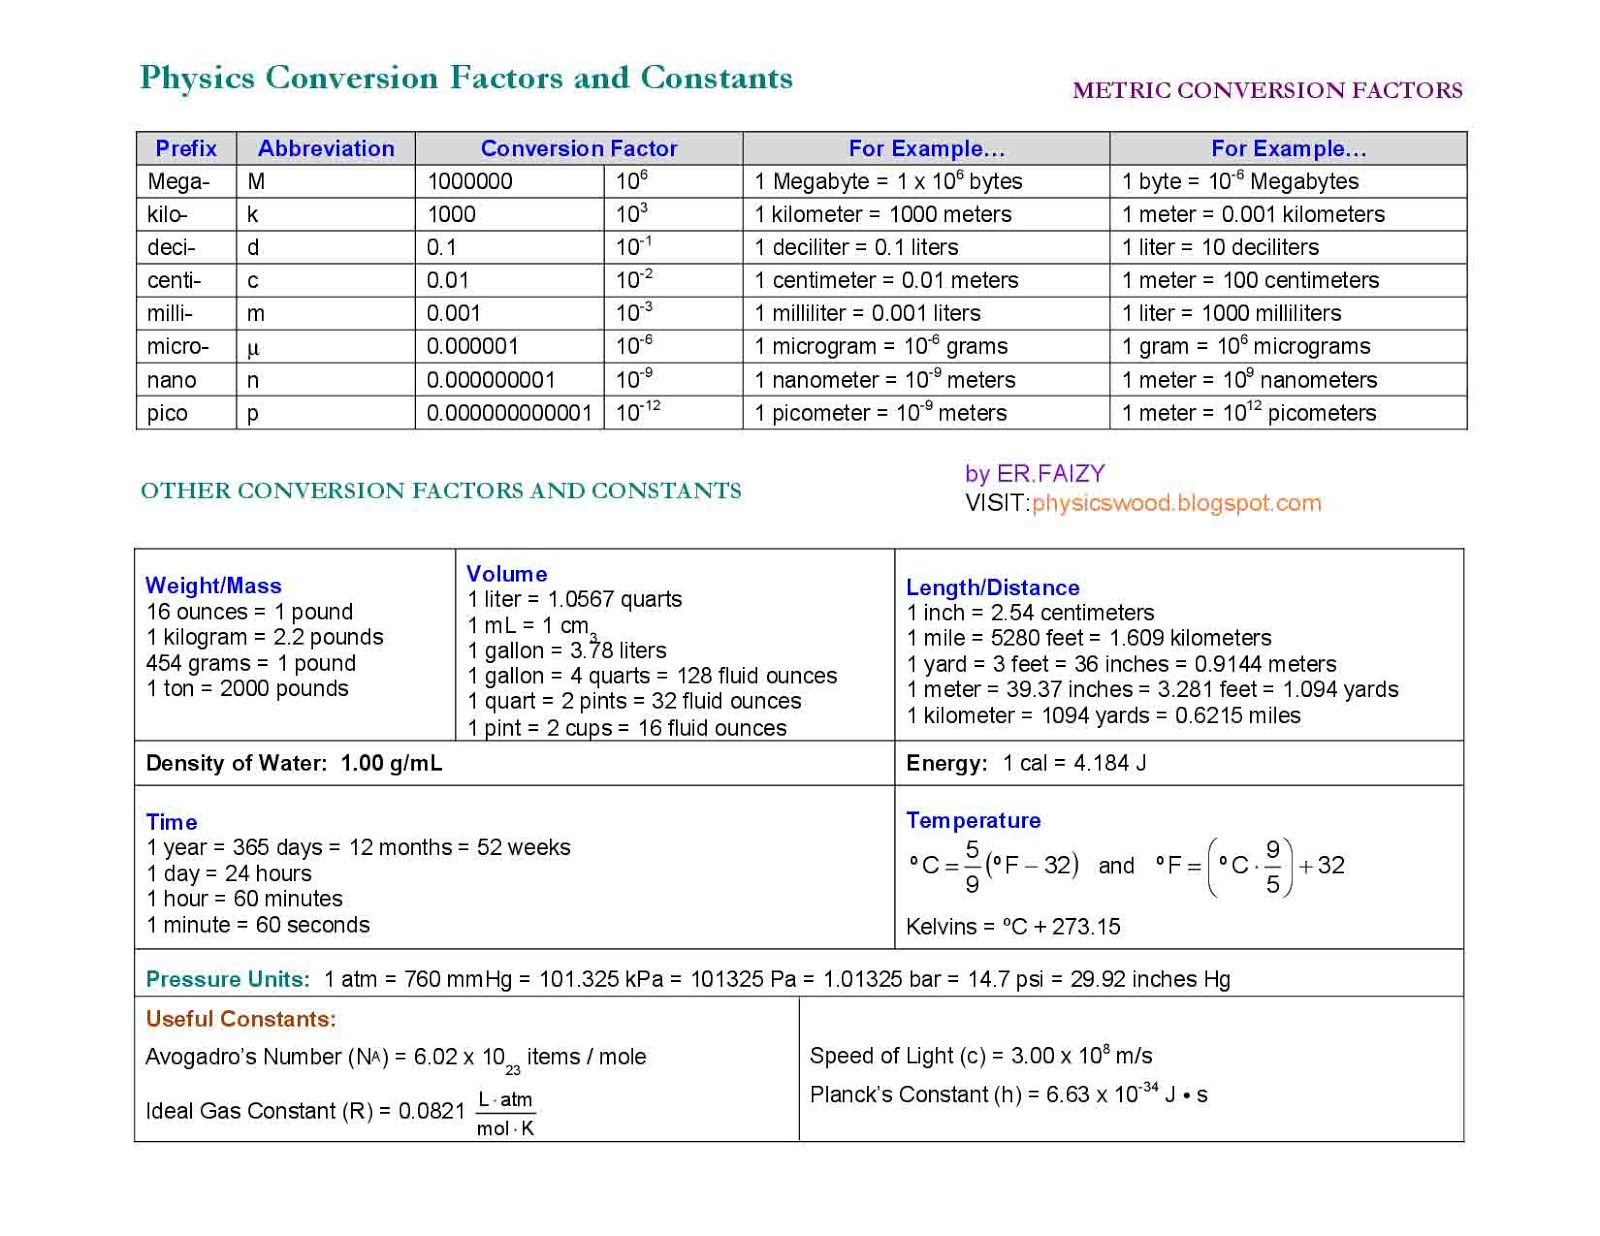 physics-wood-basic-physics-conversion-factors-and-constants